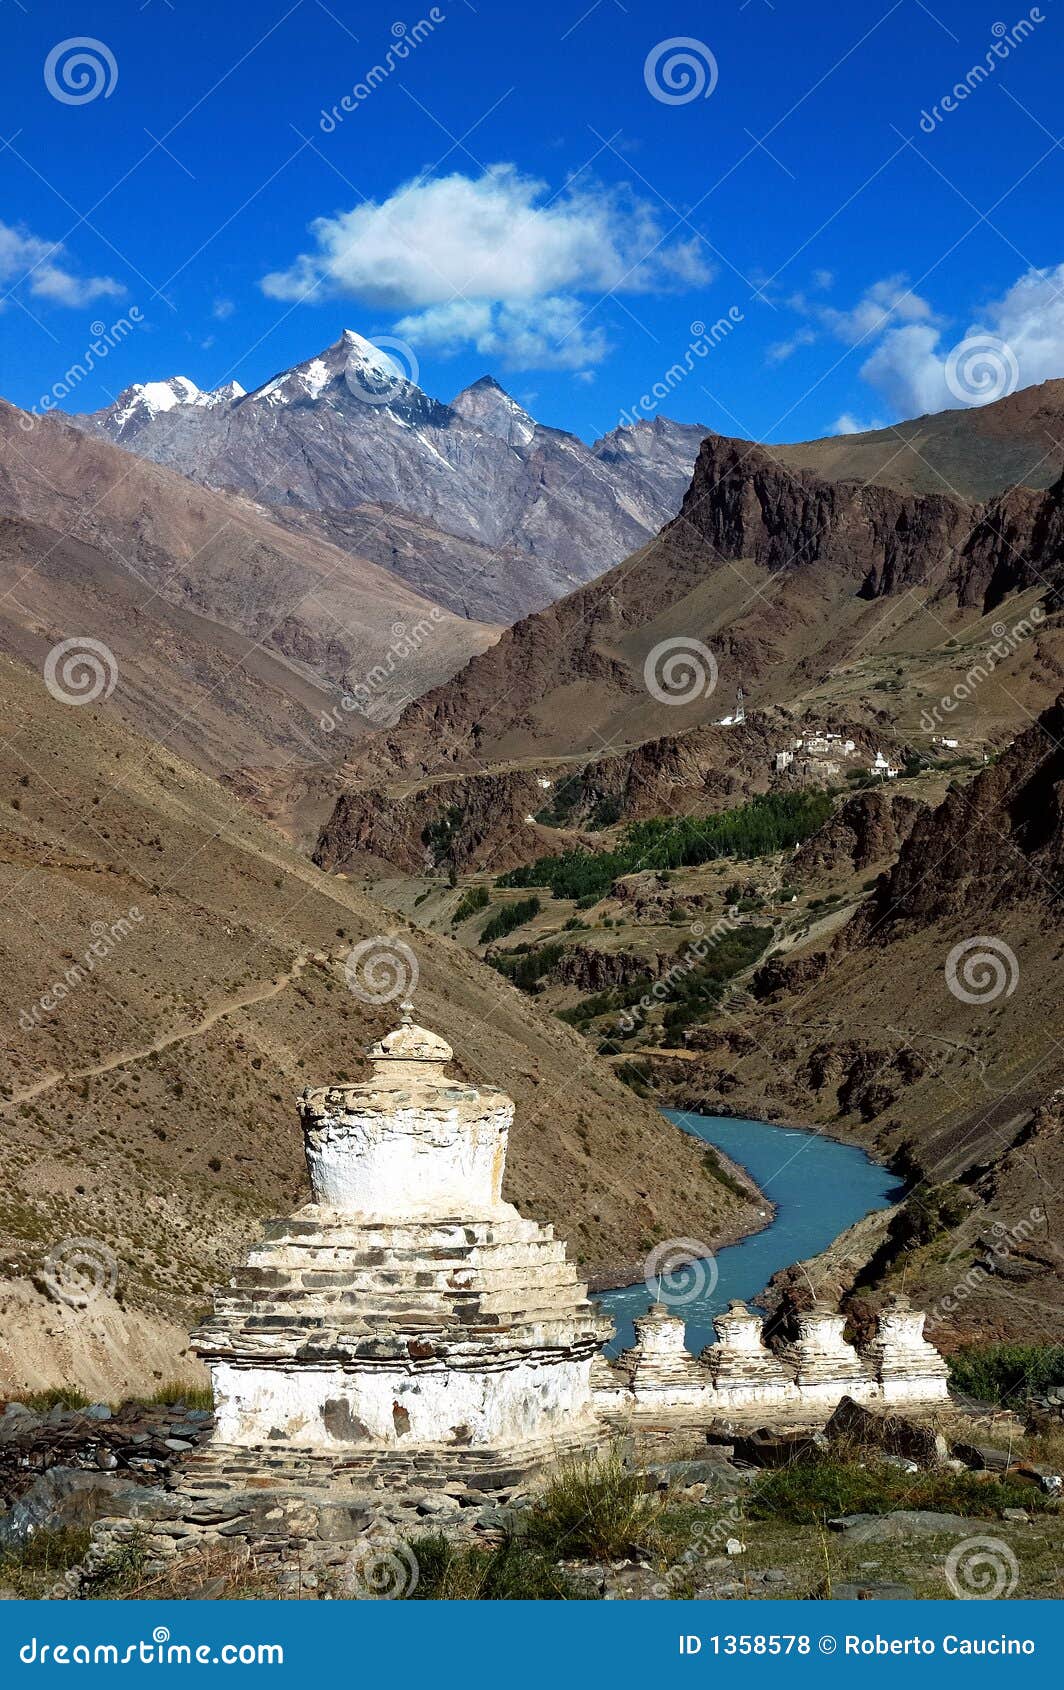 tibetan stupas in ladakh